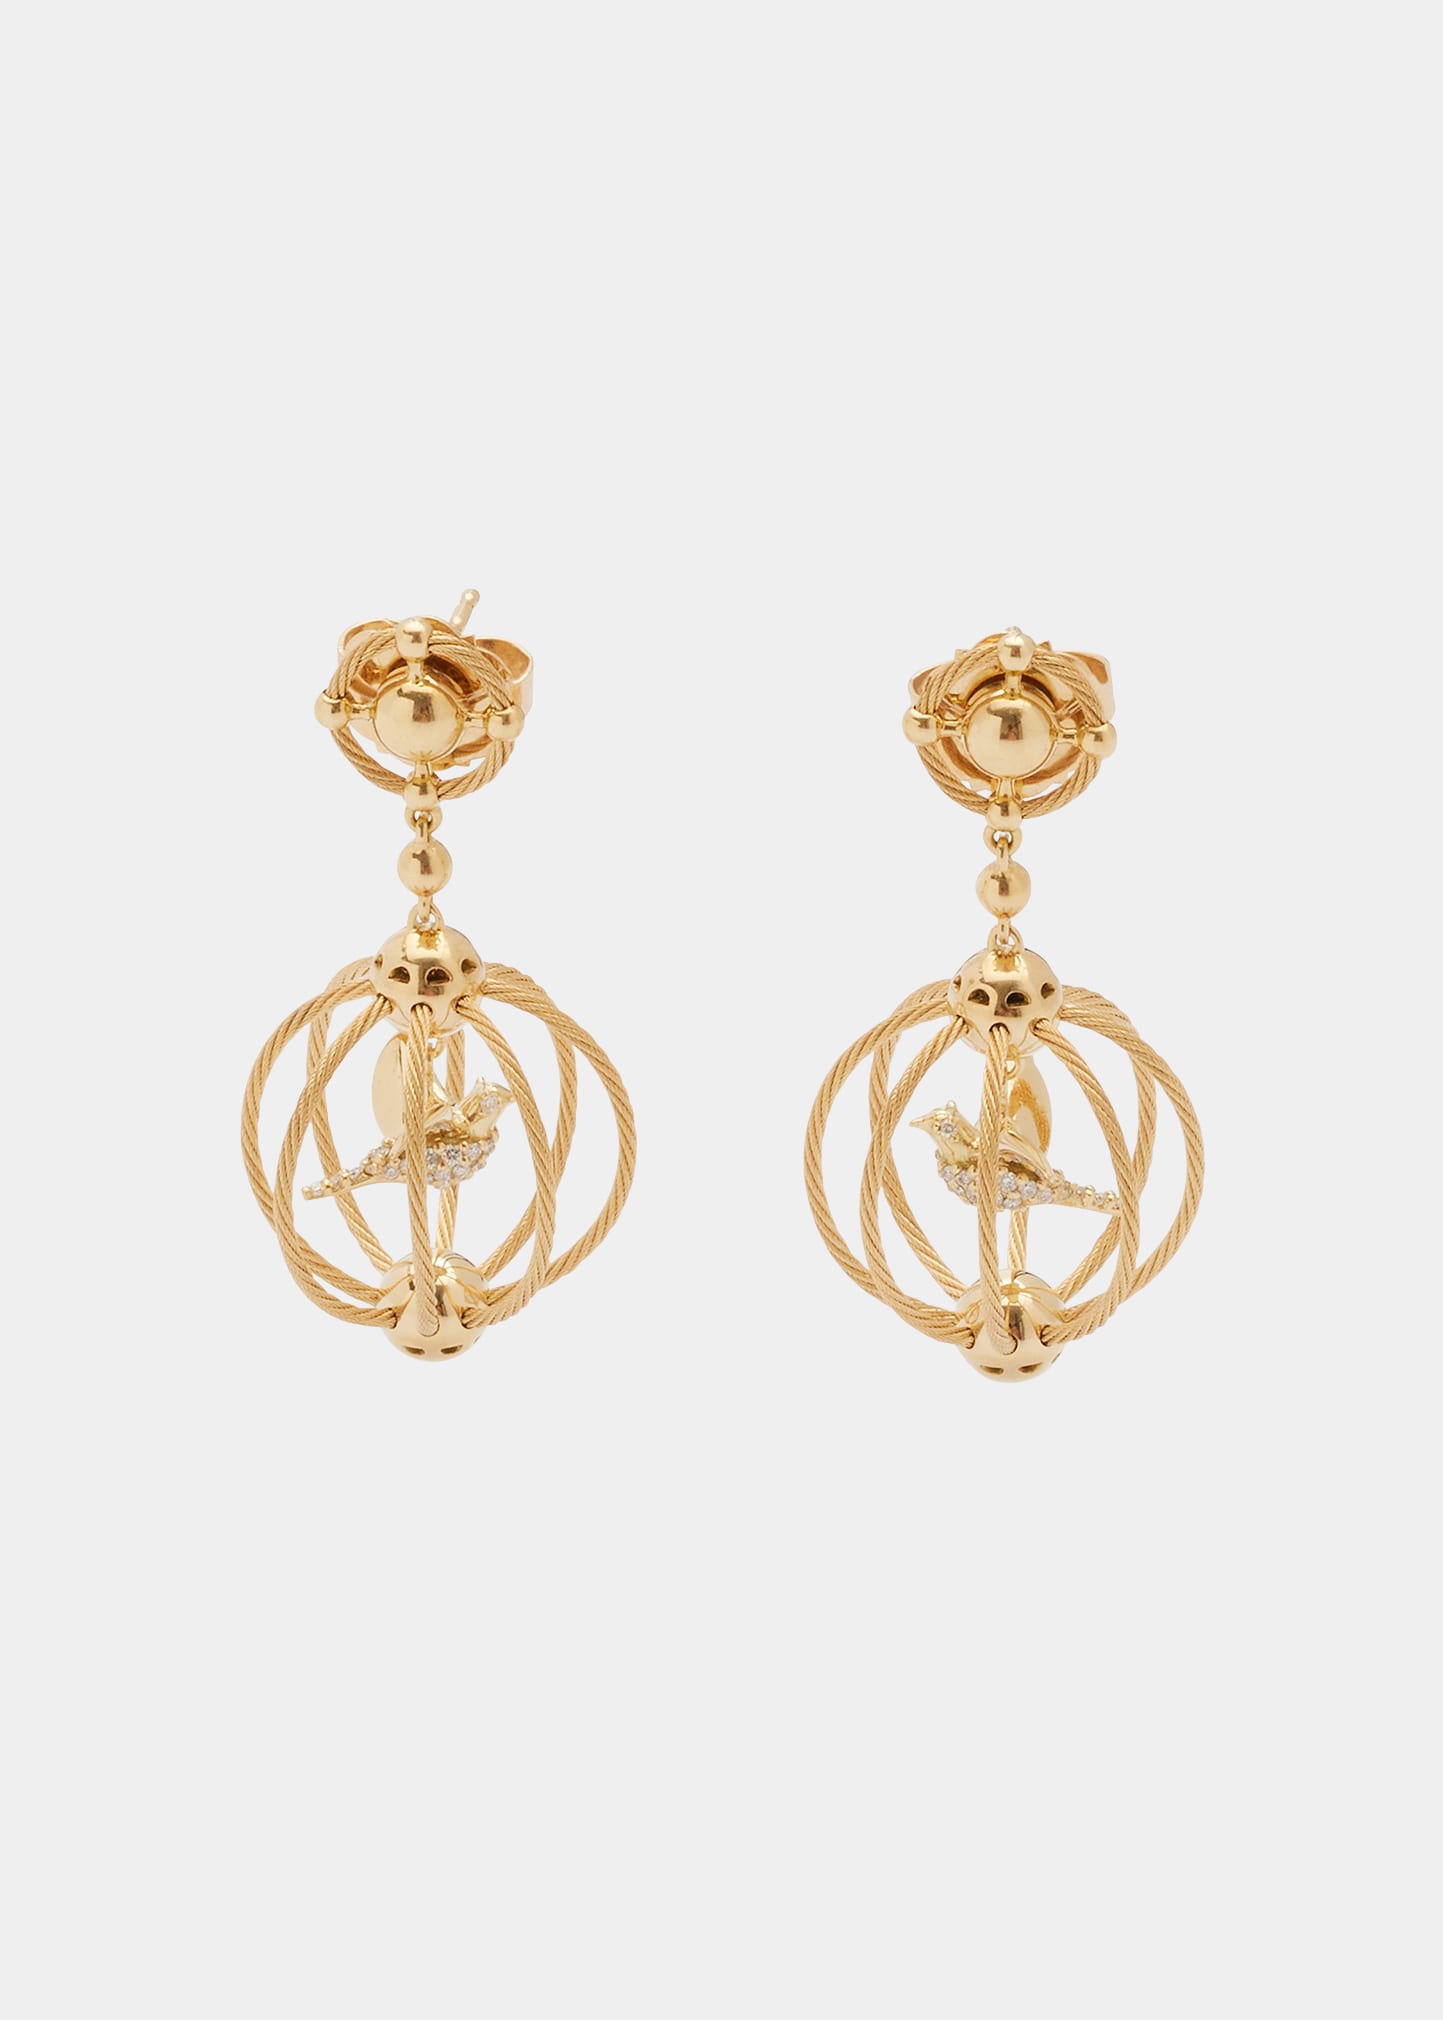 18k Gold Birdcage Earrings with Diamonds